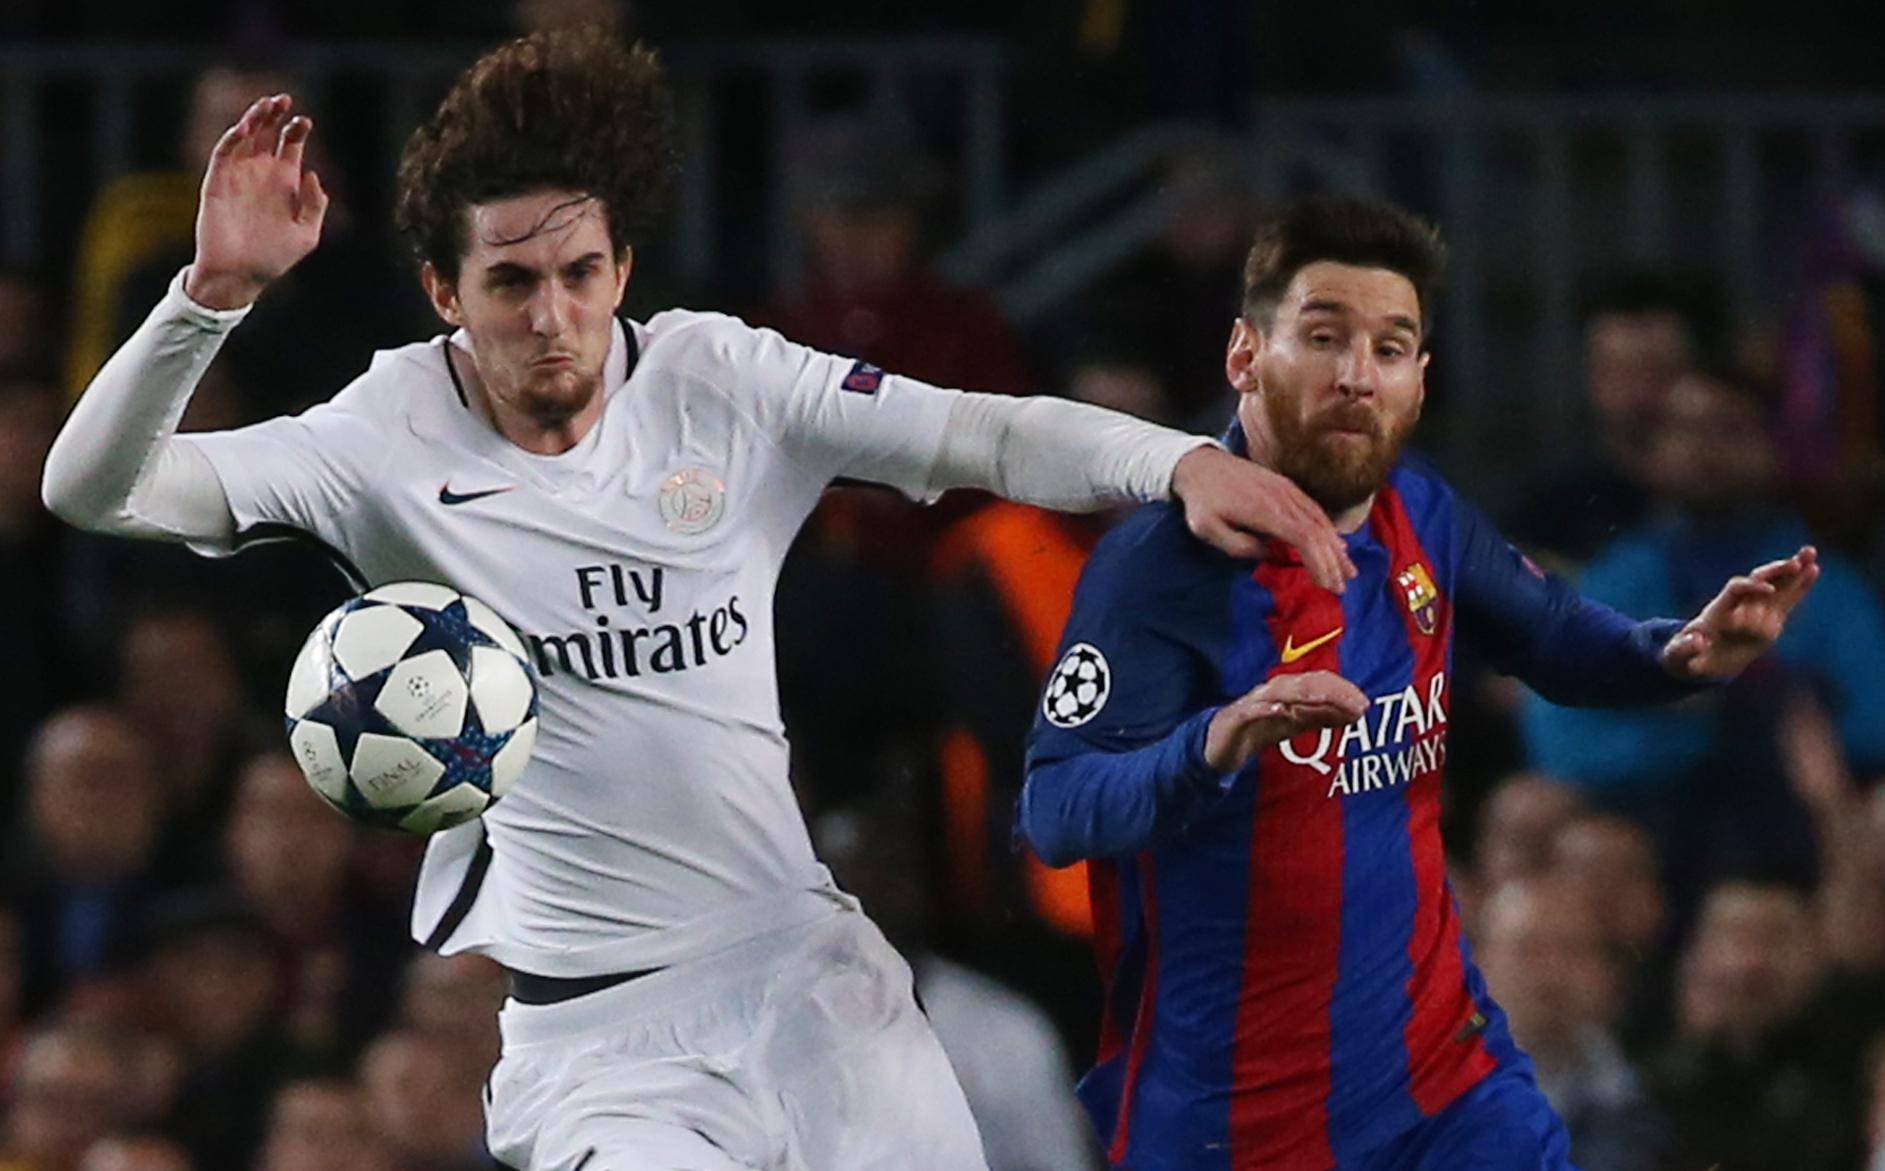 Paris Saint-Germain's Adrien Rabiot in action with Barcelona's Lionel Messi